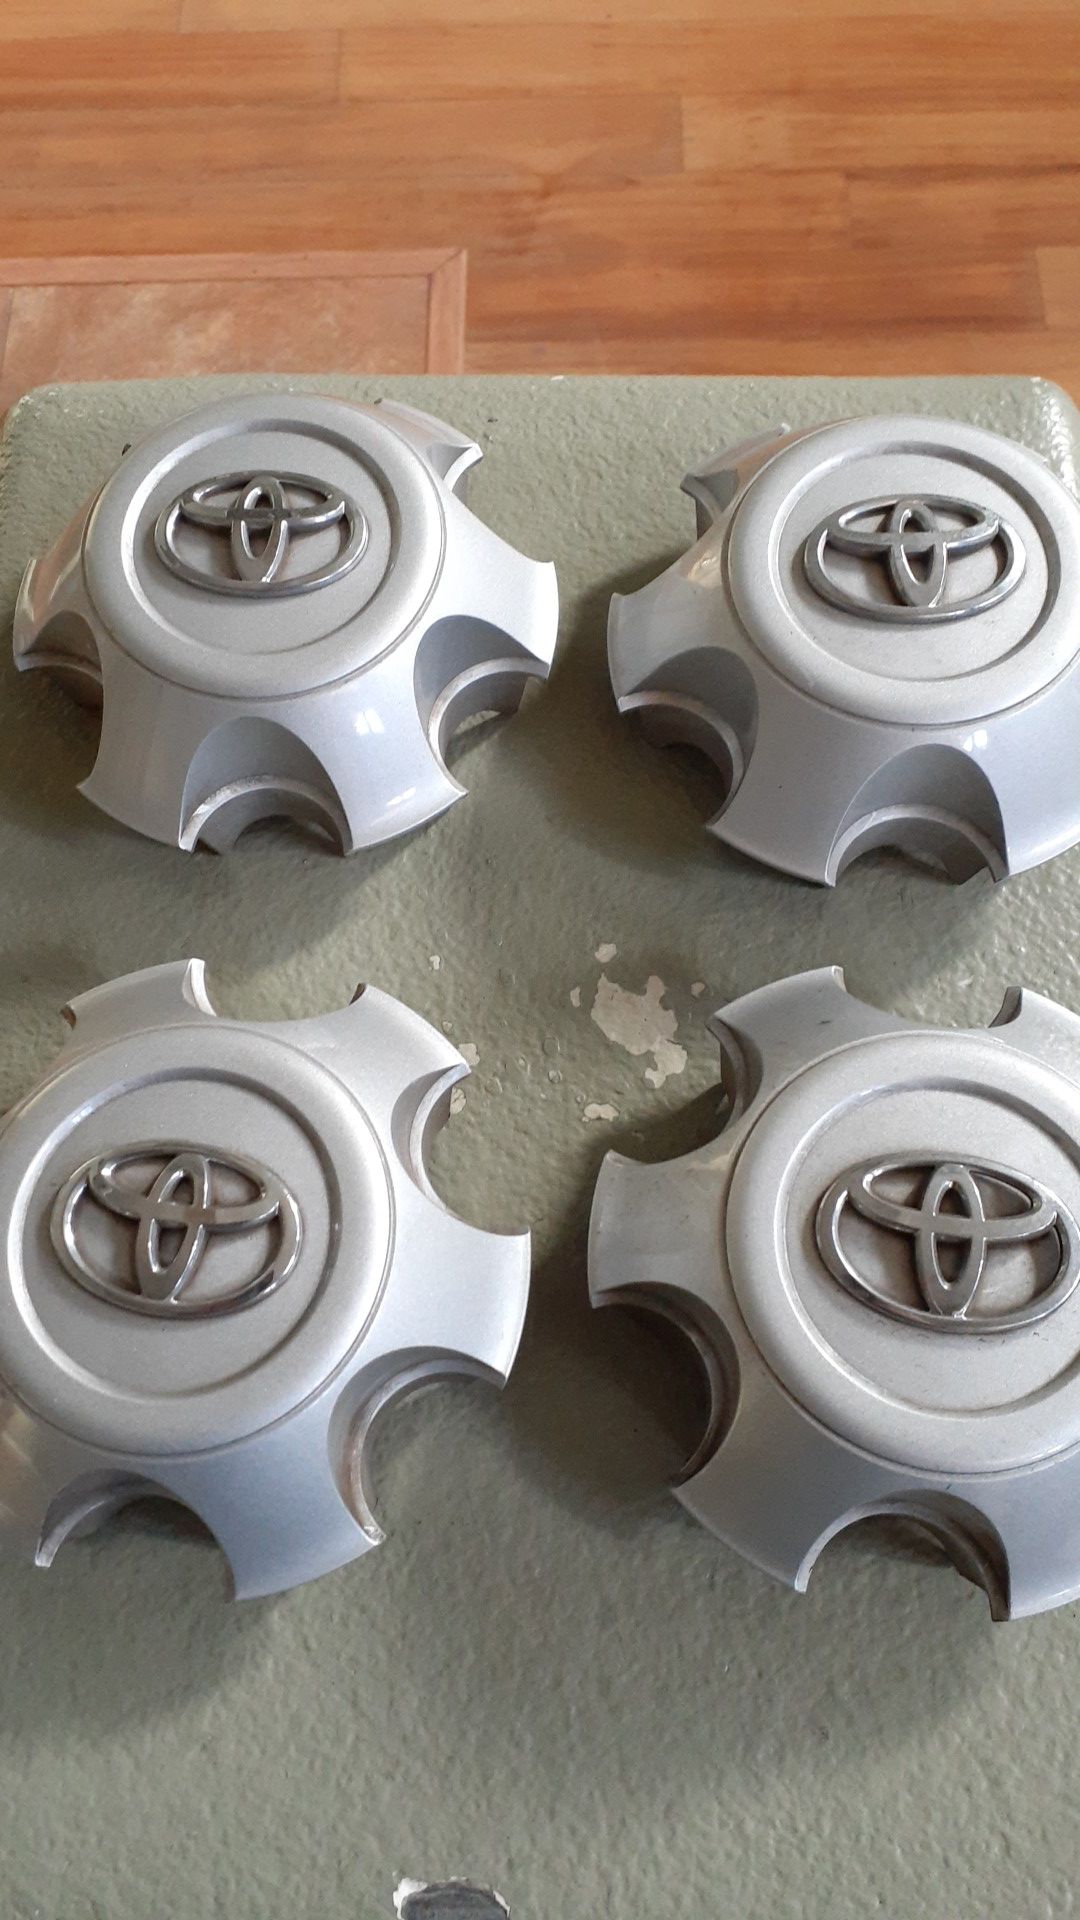 OEM Toyota Tacoma wheels accessories.